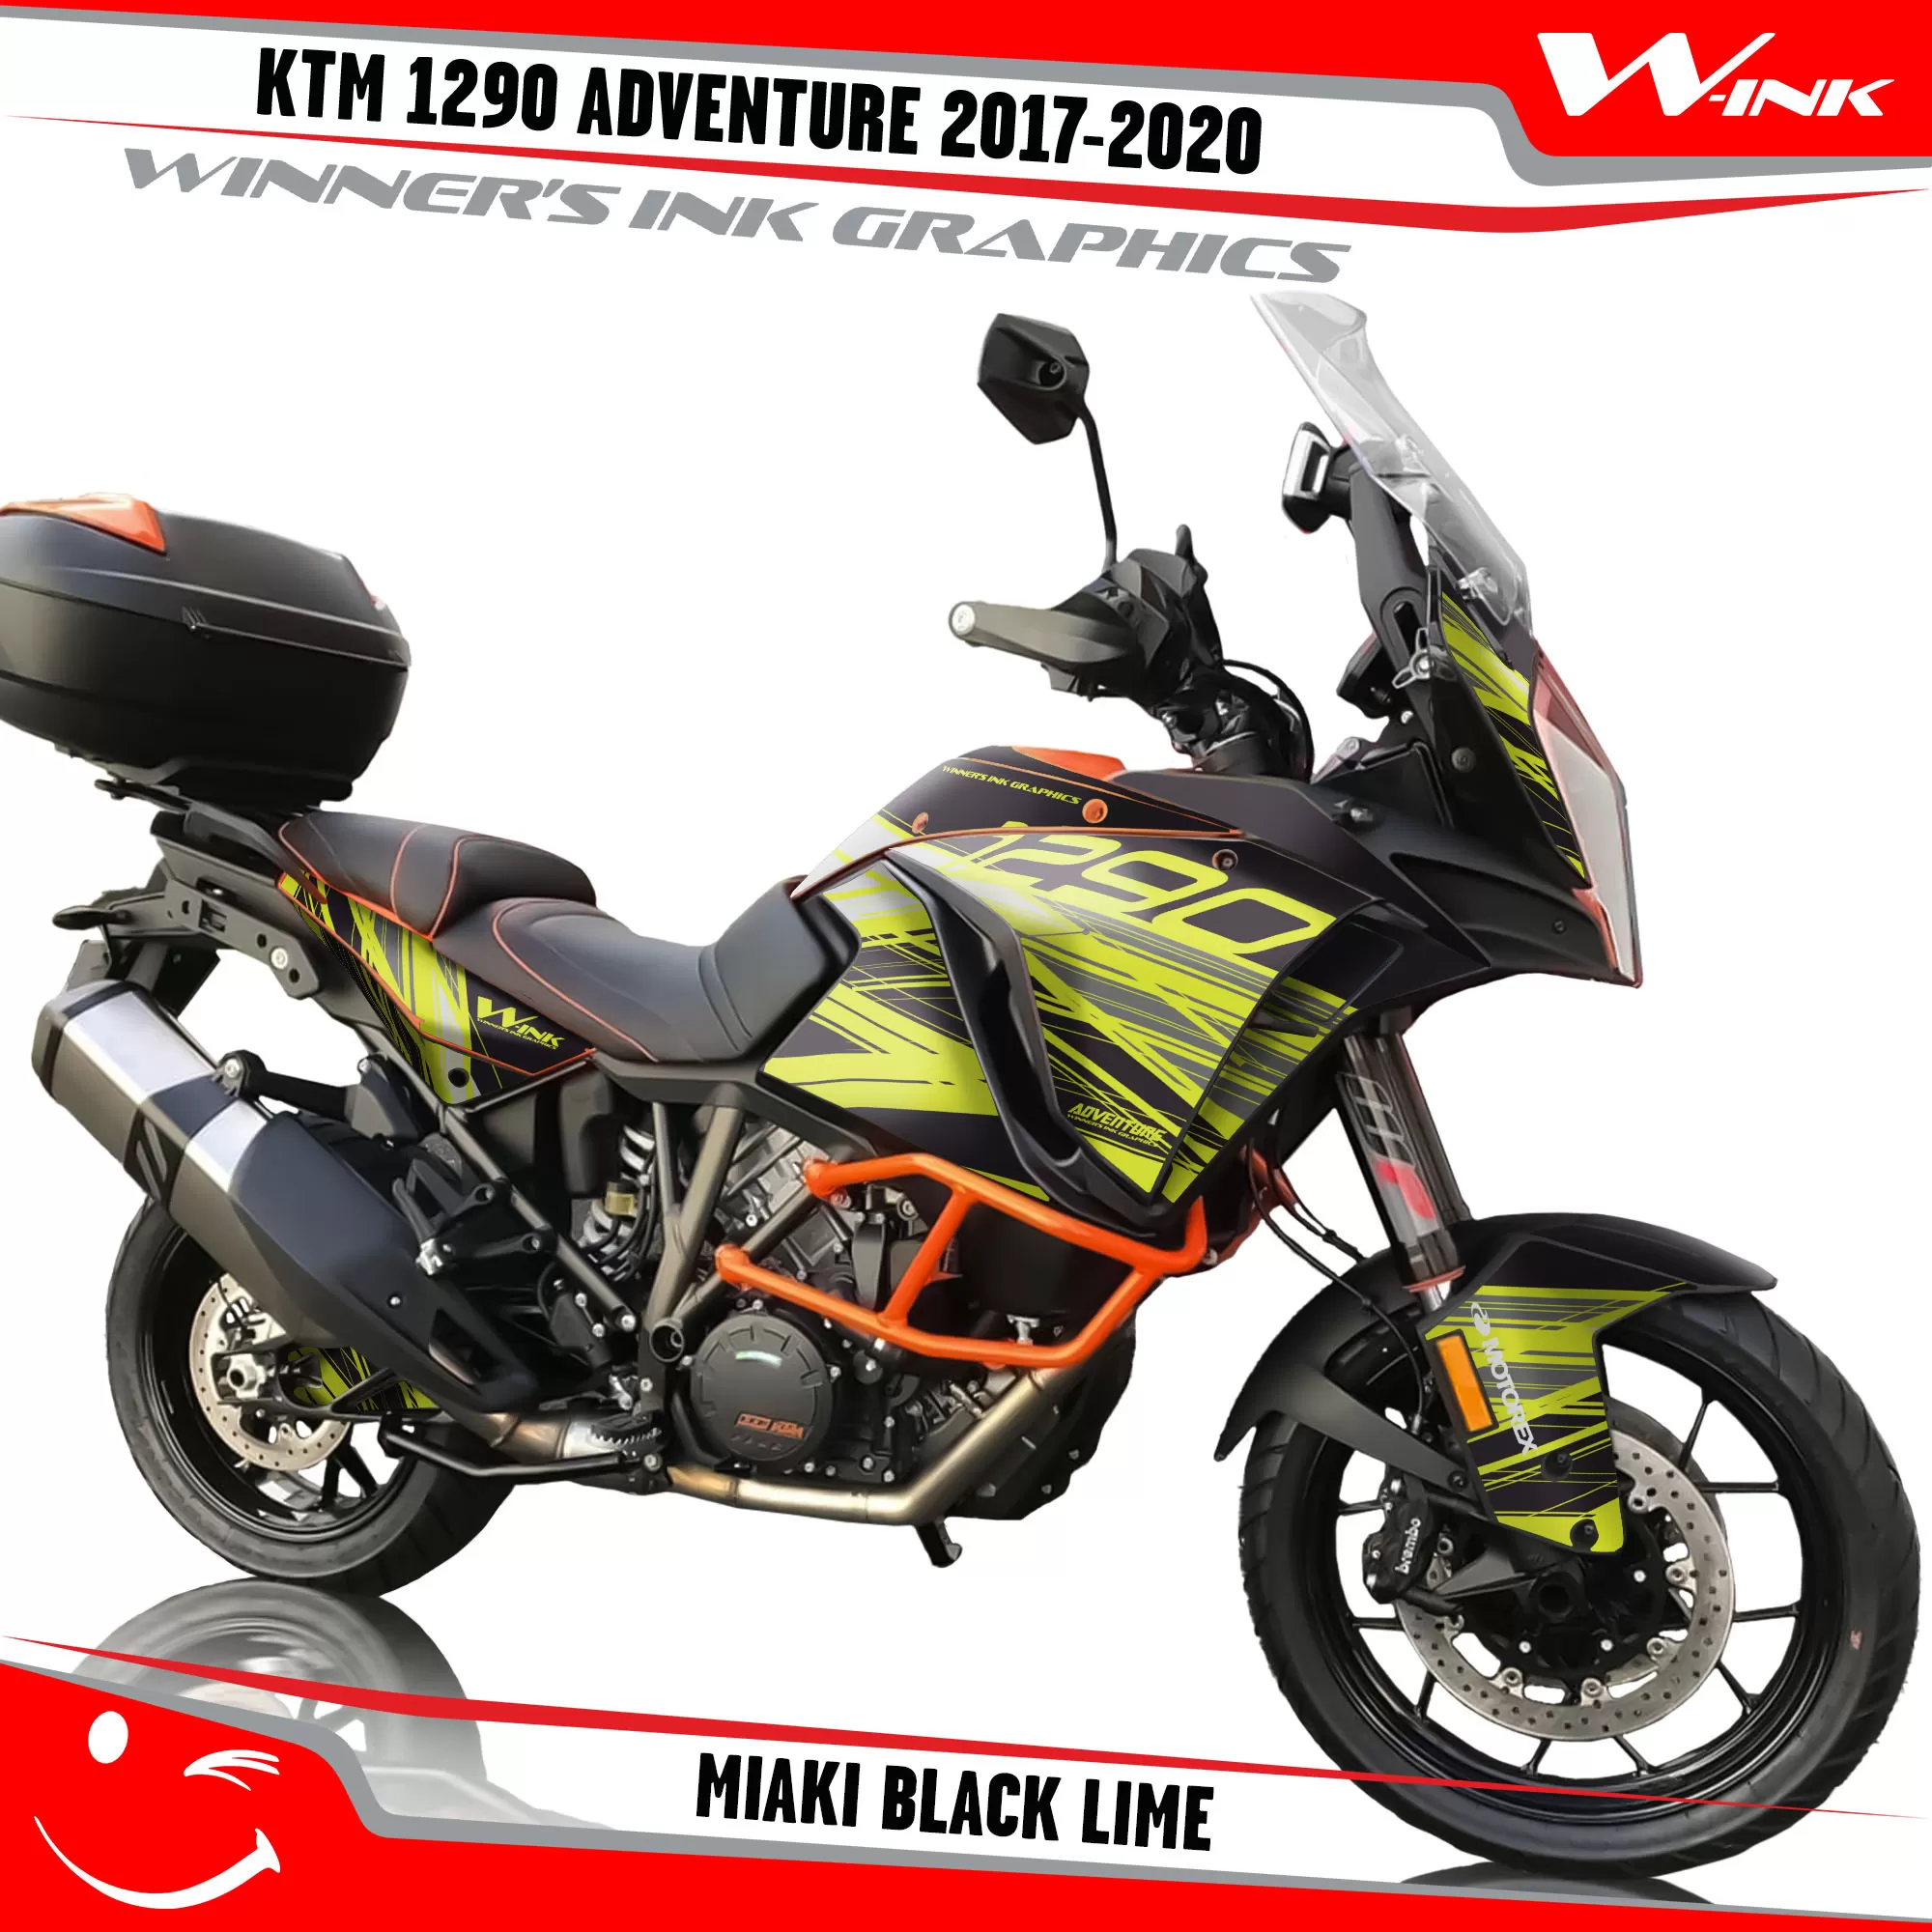 KTM-Adventure-1290-2017-2018-2019-2020-graphics-kit-and-decals-Miaki-Black-Lime